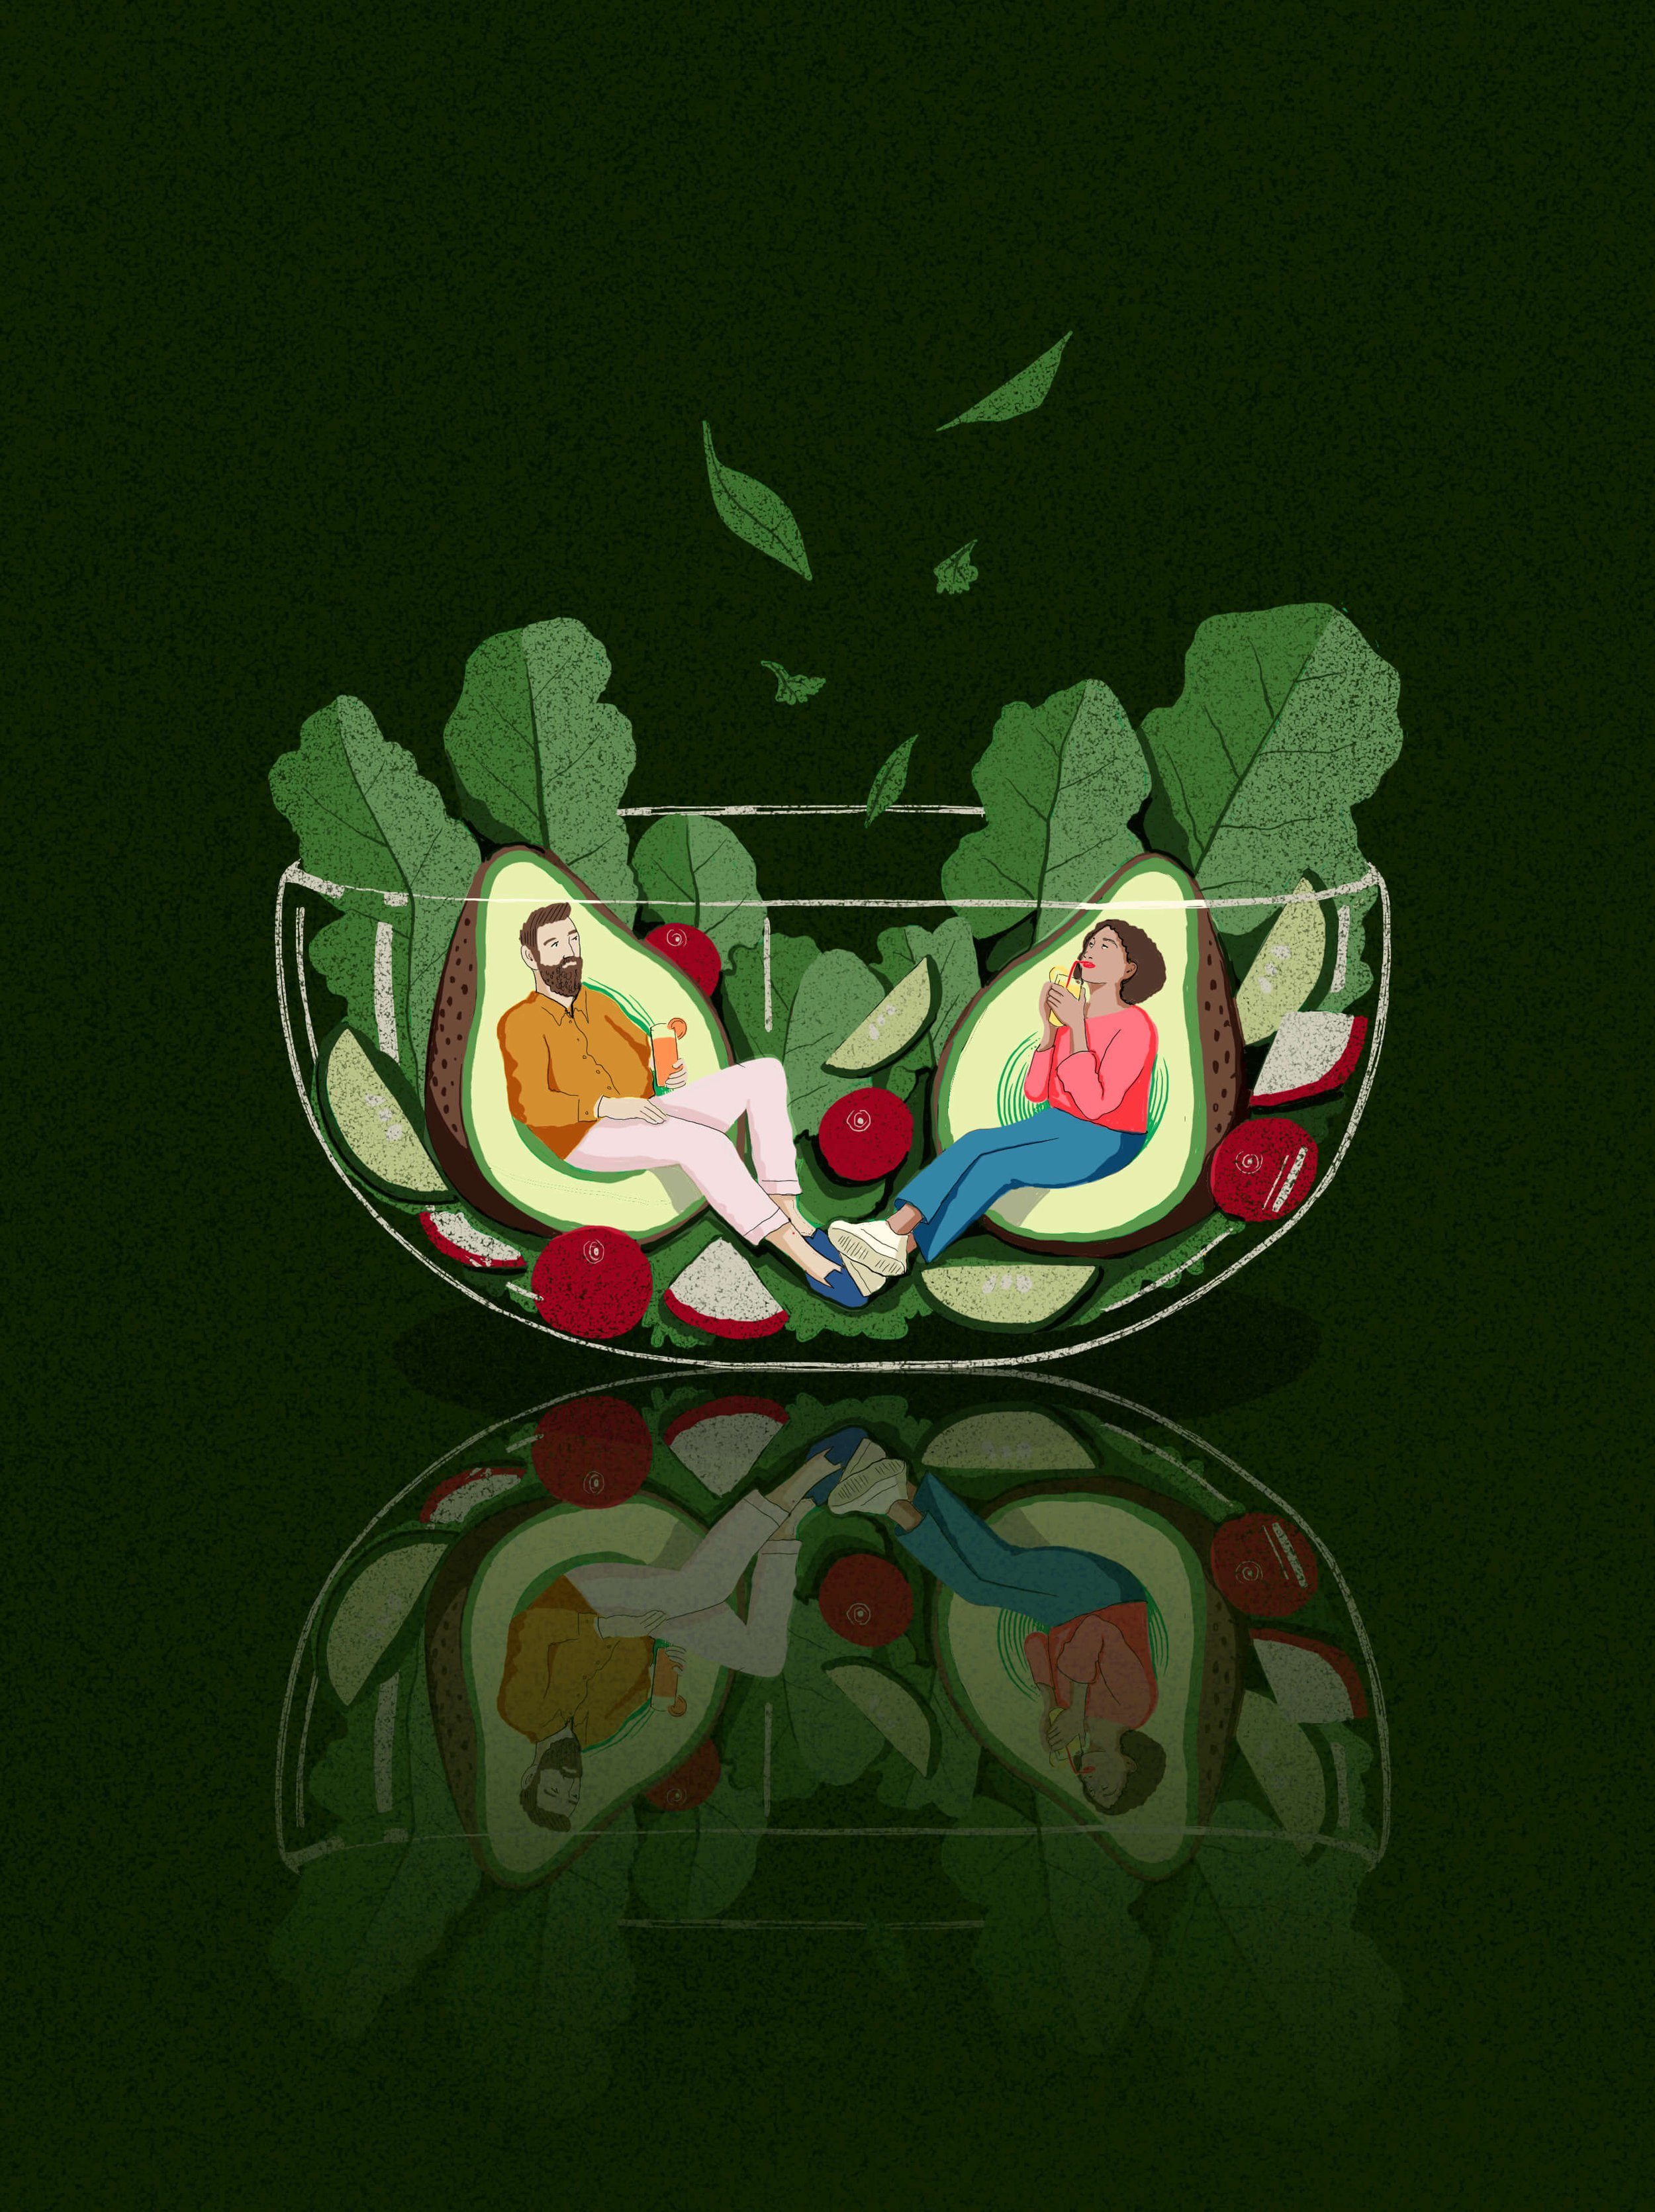 editorial+food+illustration+by+lisa+maltby.jpg